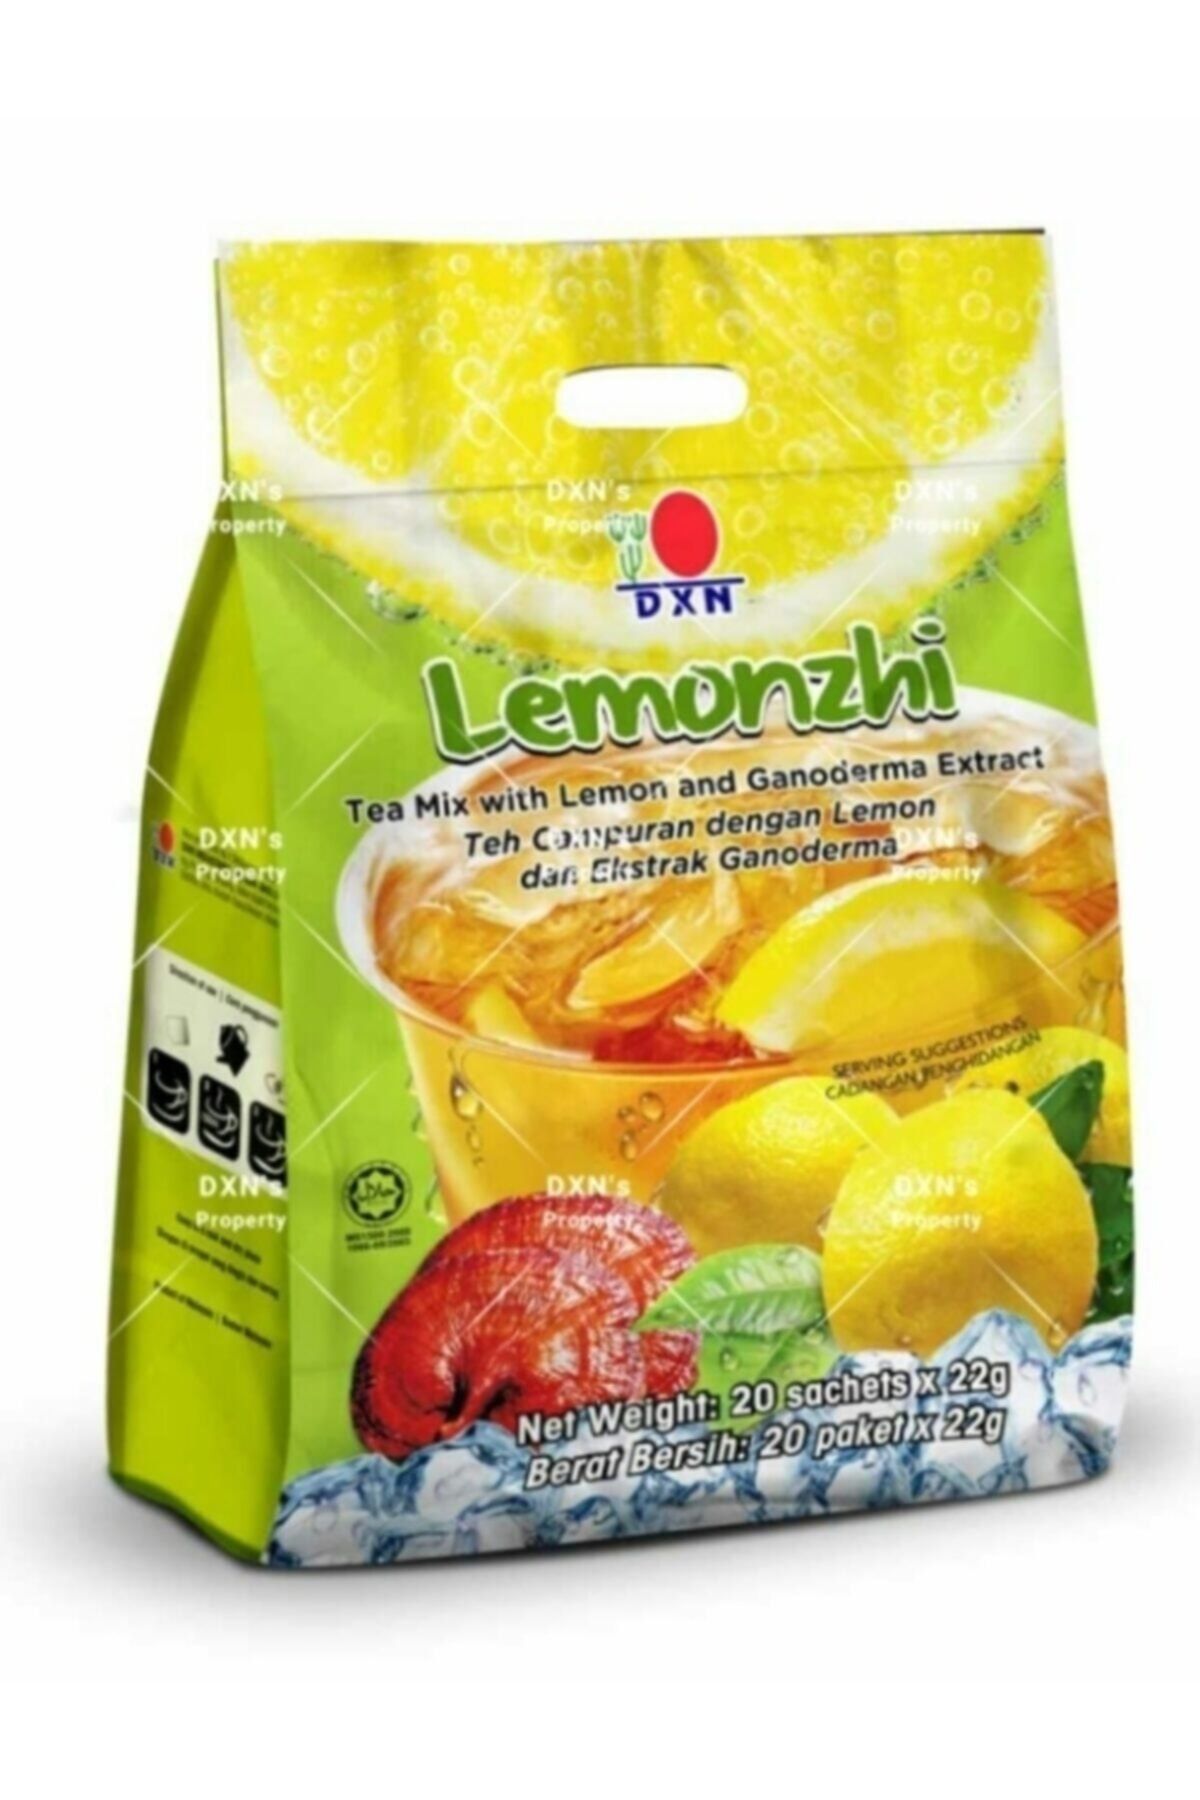 DXN Gano Organik Limonata Lemonzhi